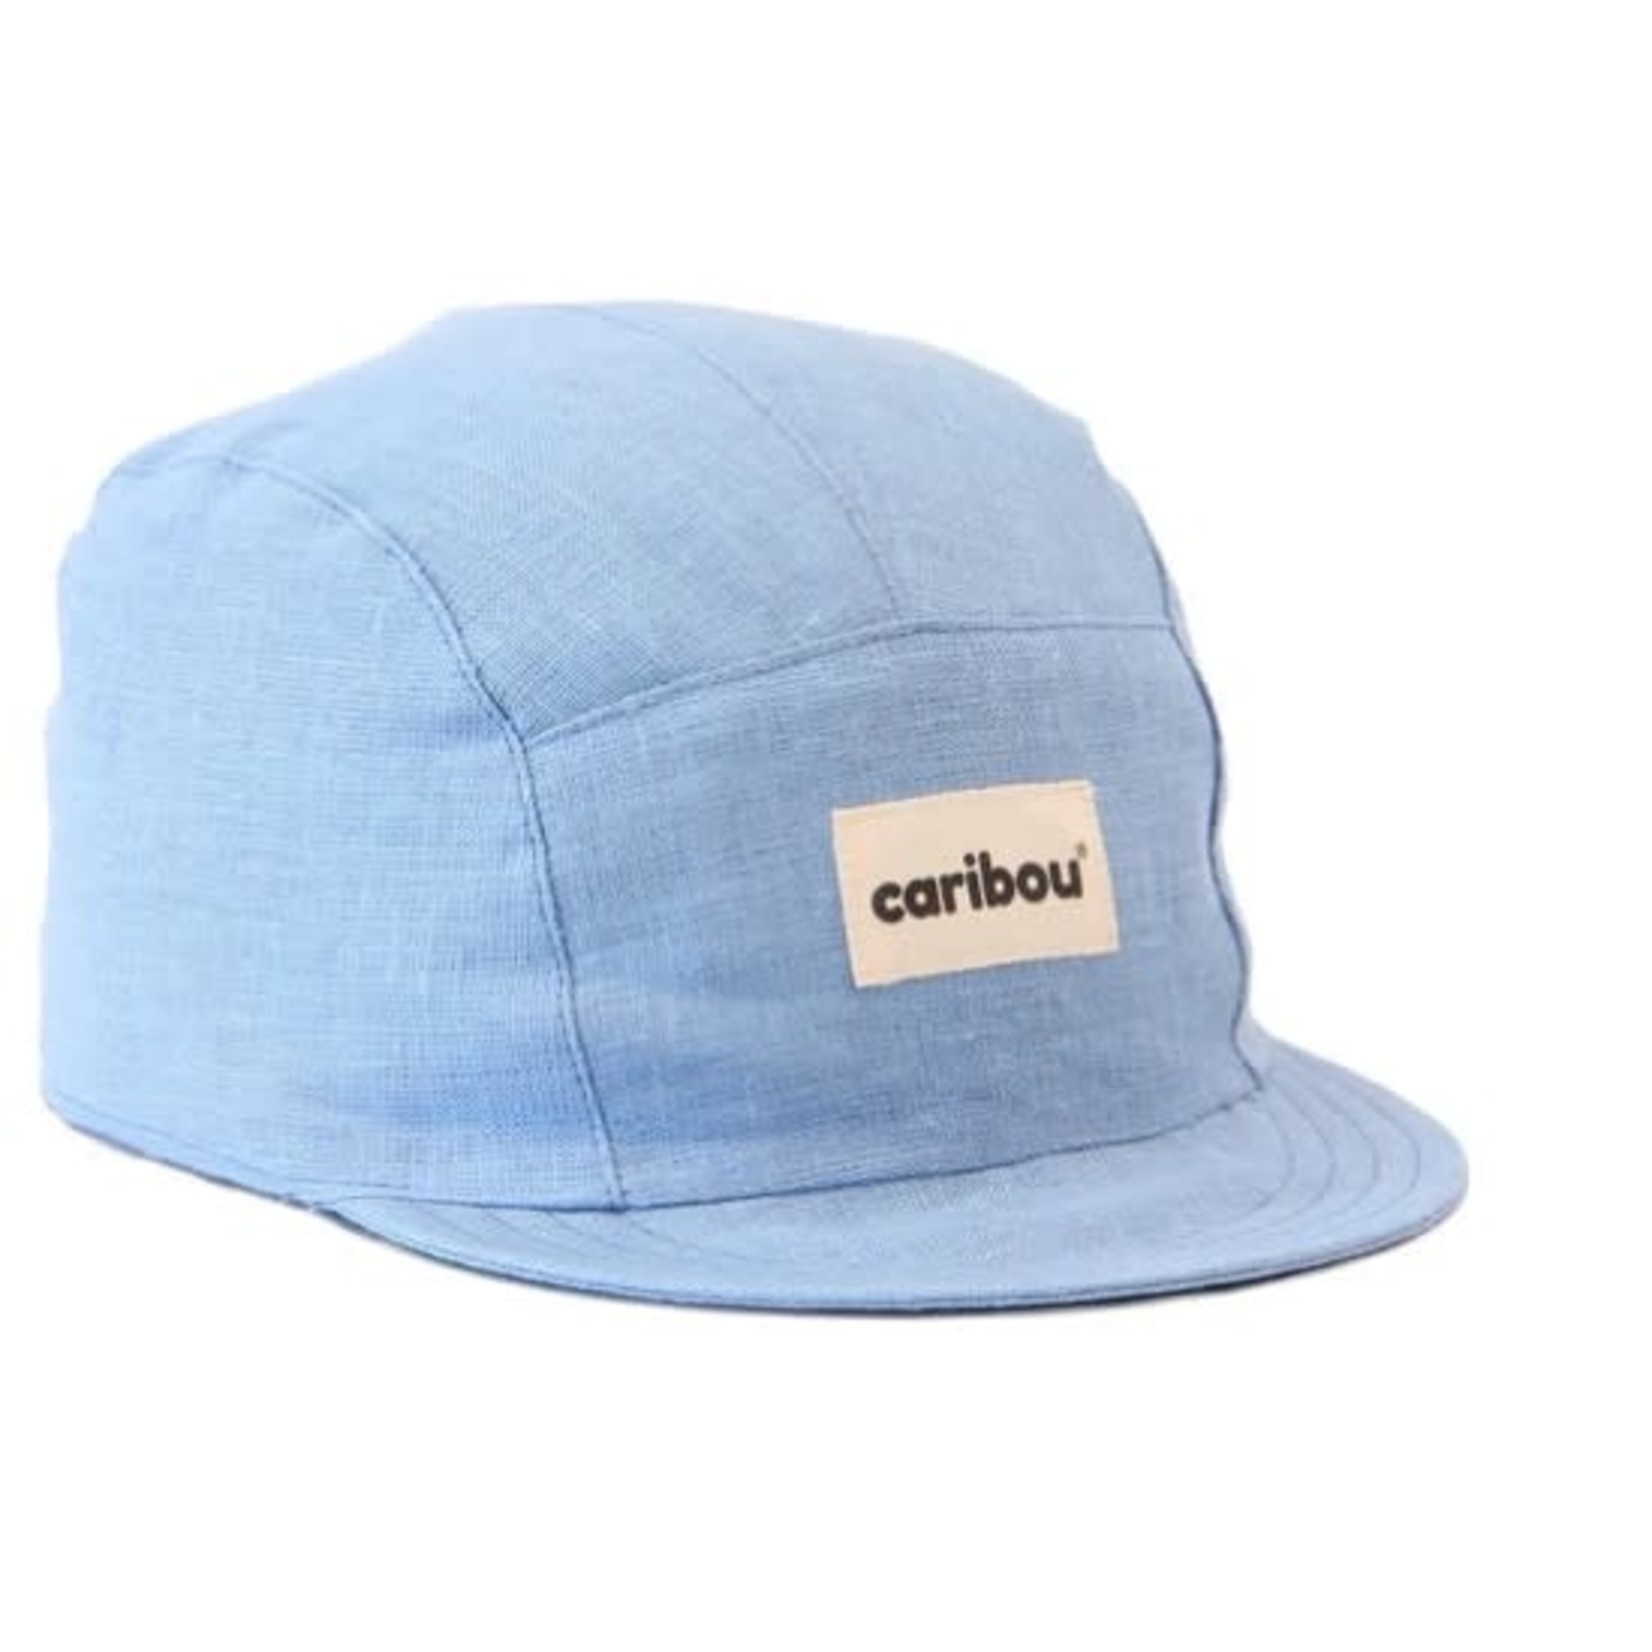 Caribou CARIBOU - Linen soft cap - sky blue